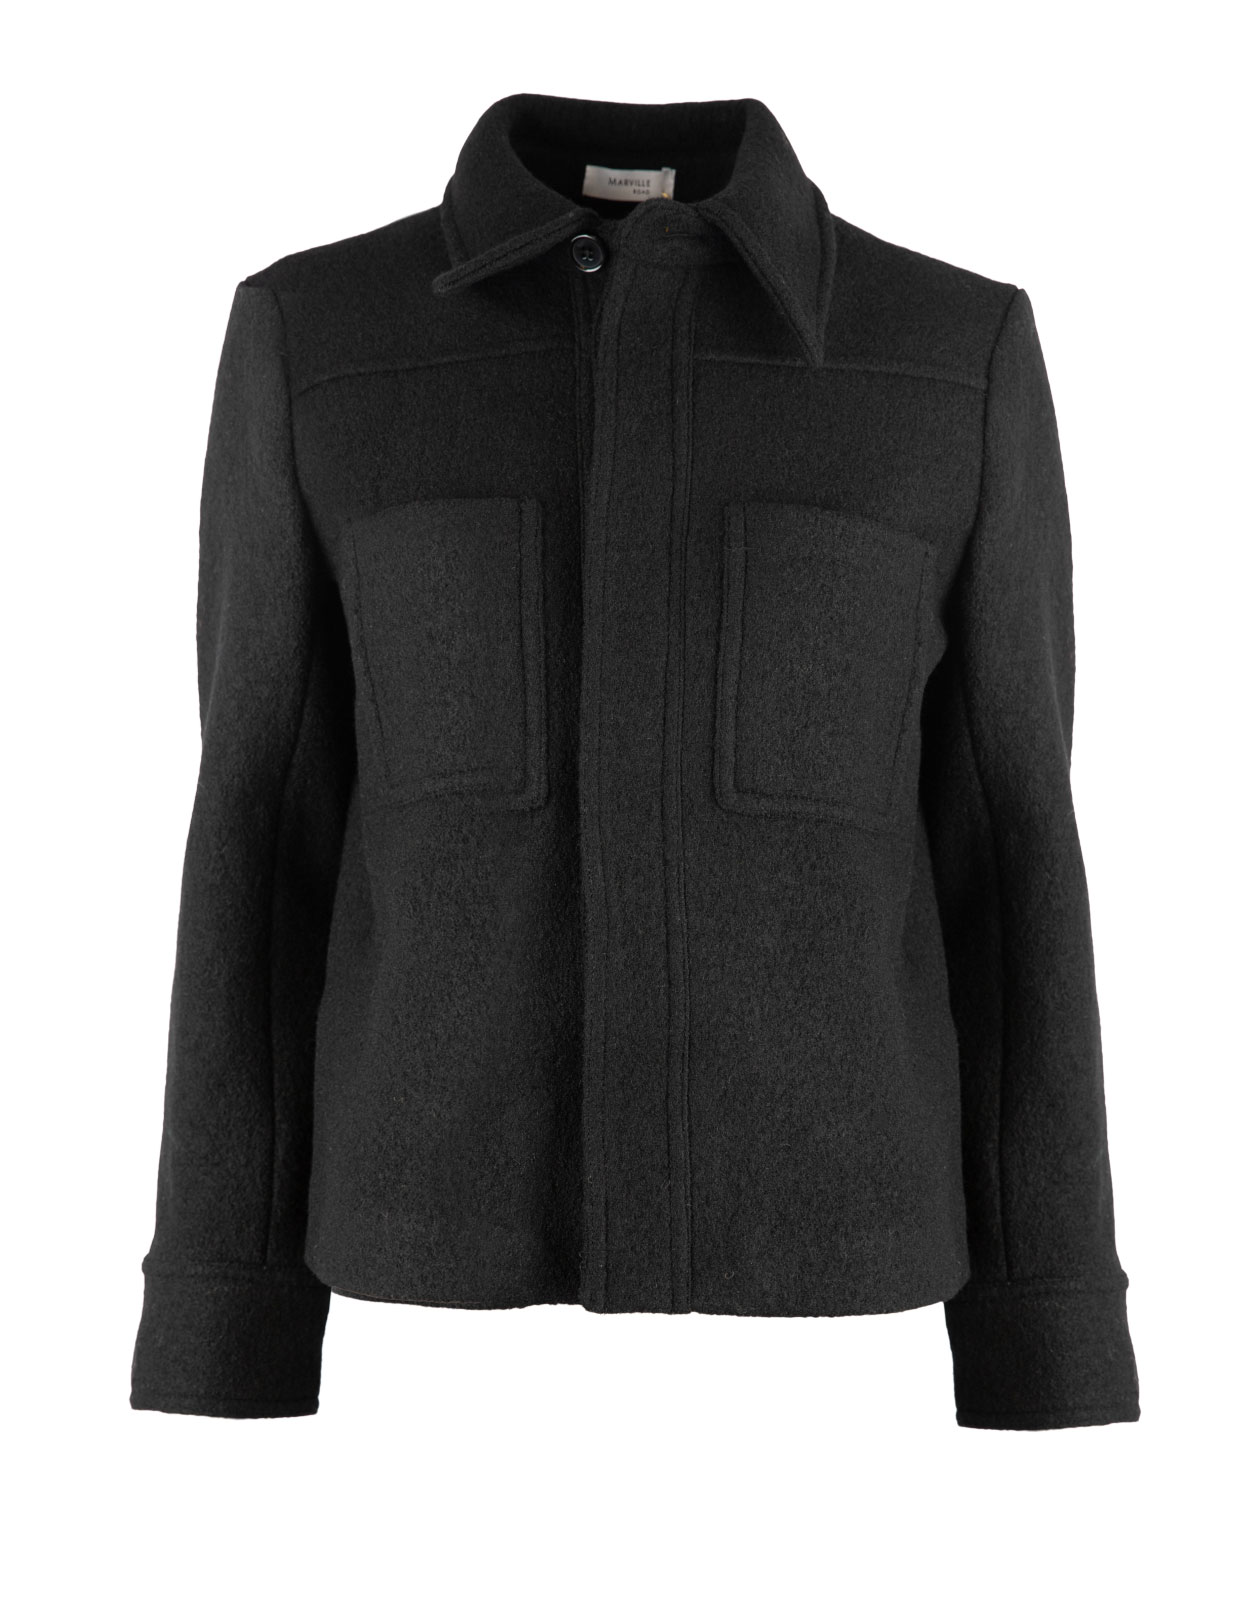 Marion Jacket Wool Black